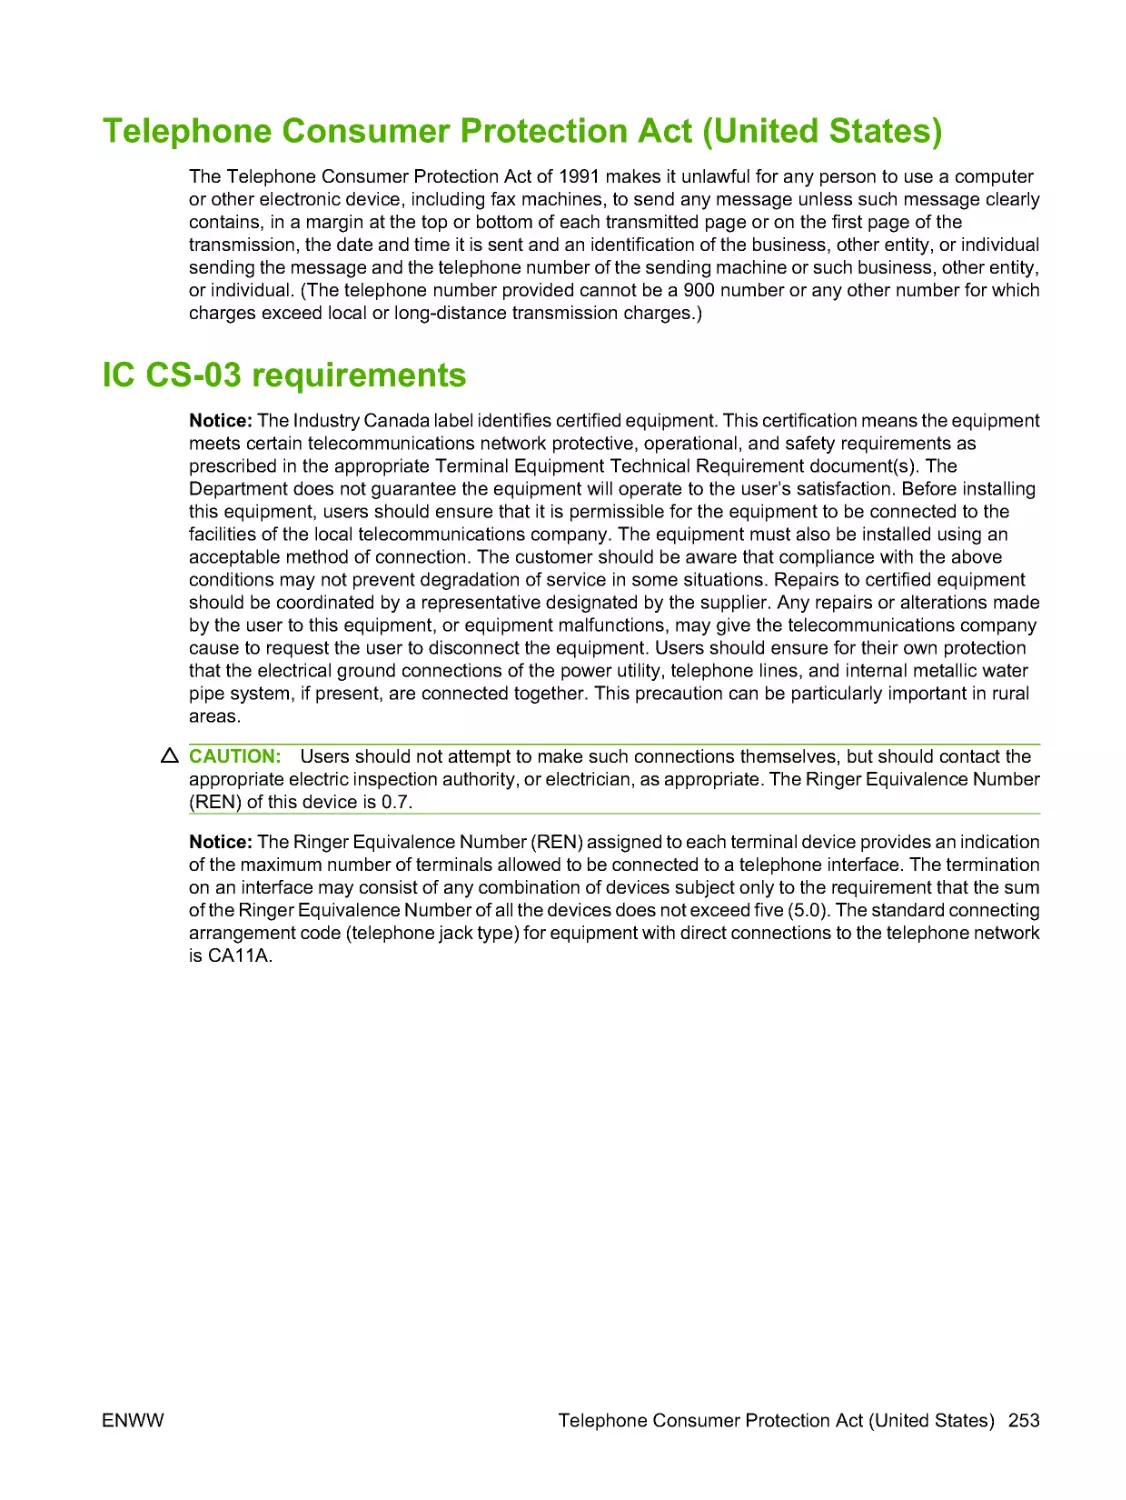 IC CS-03 requirements